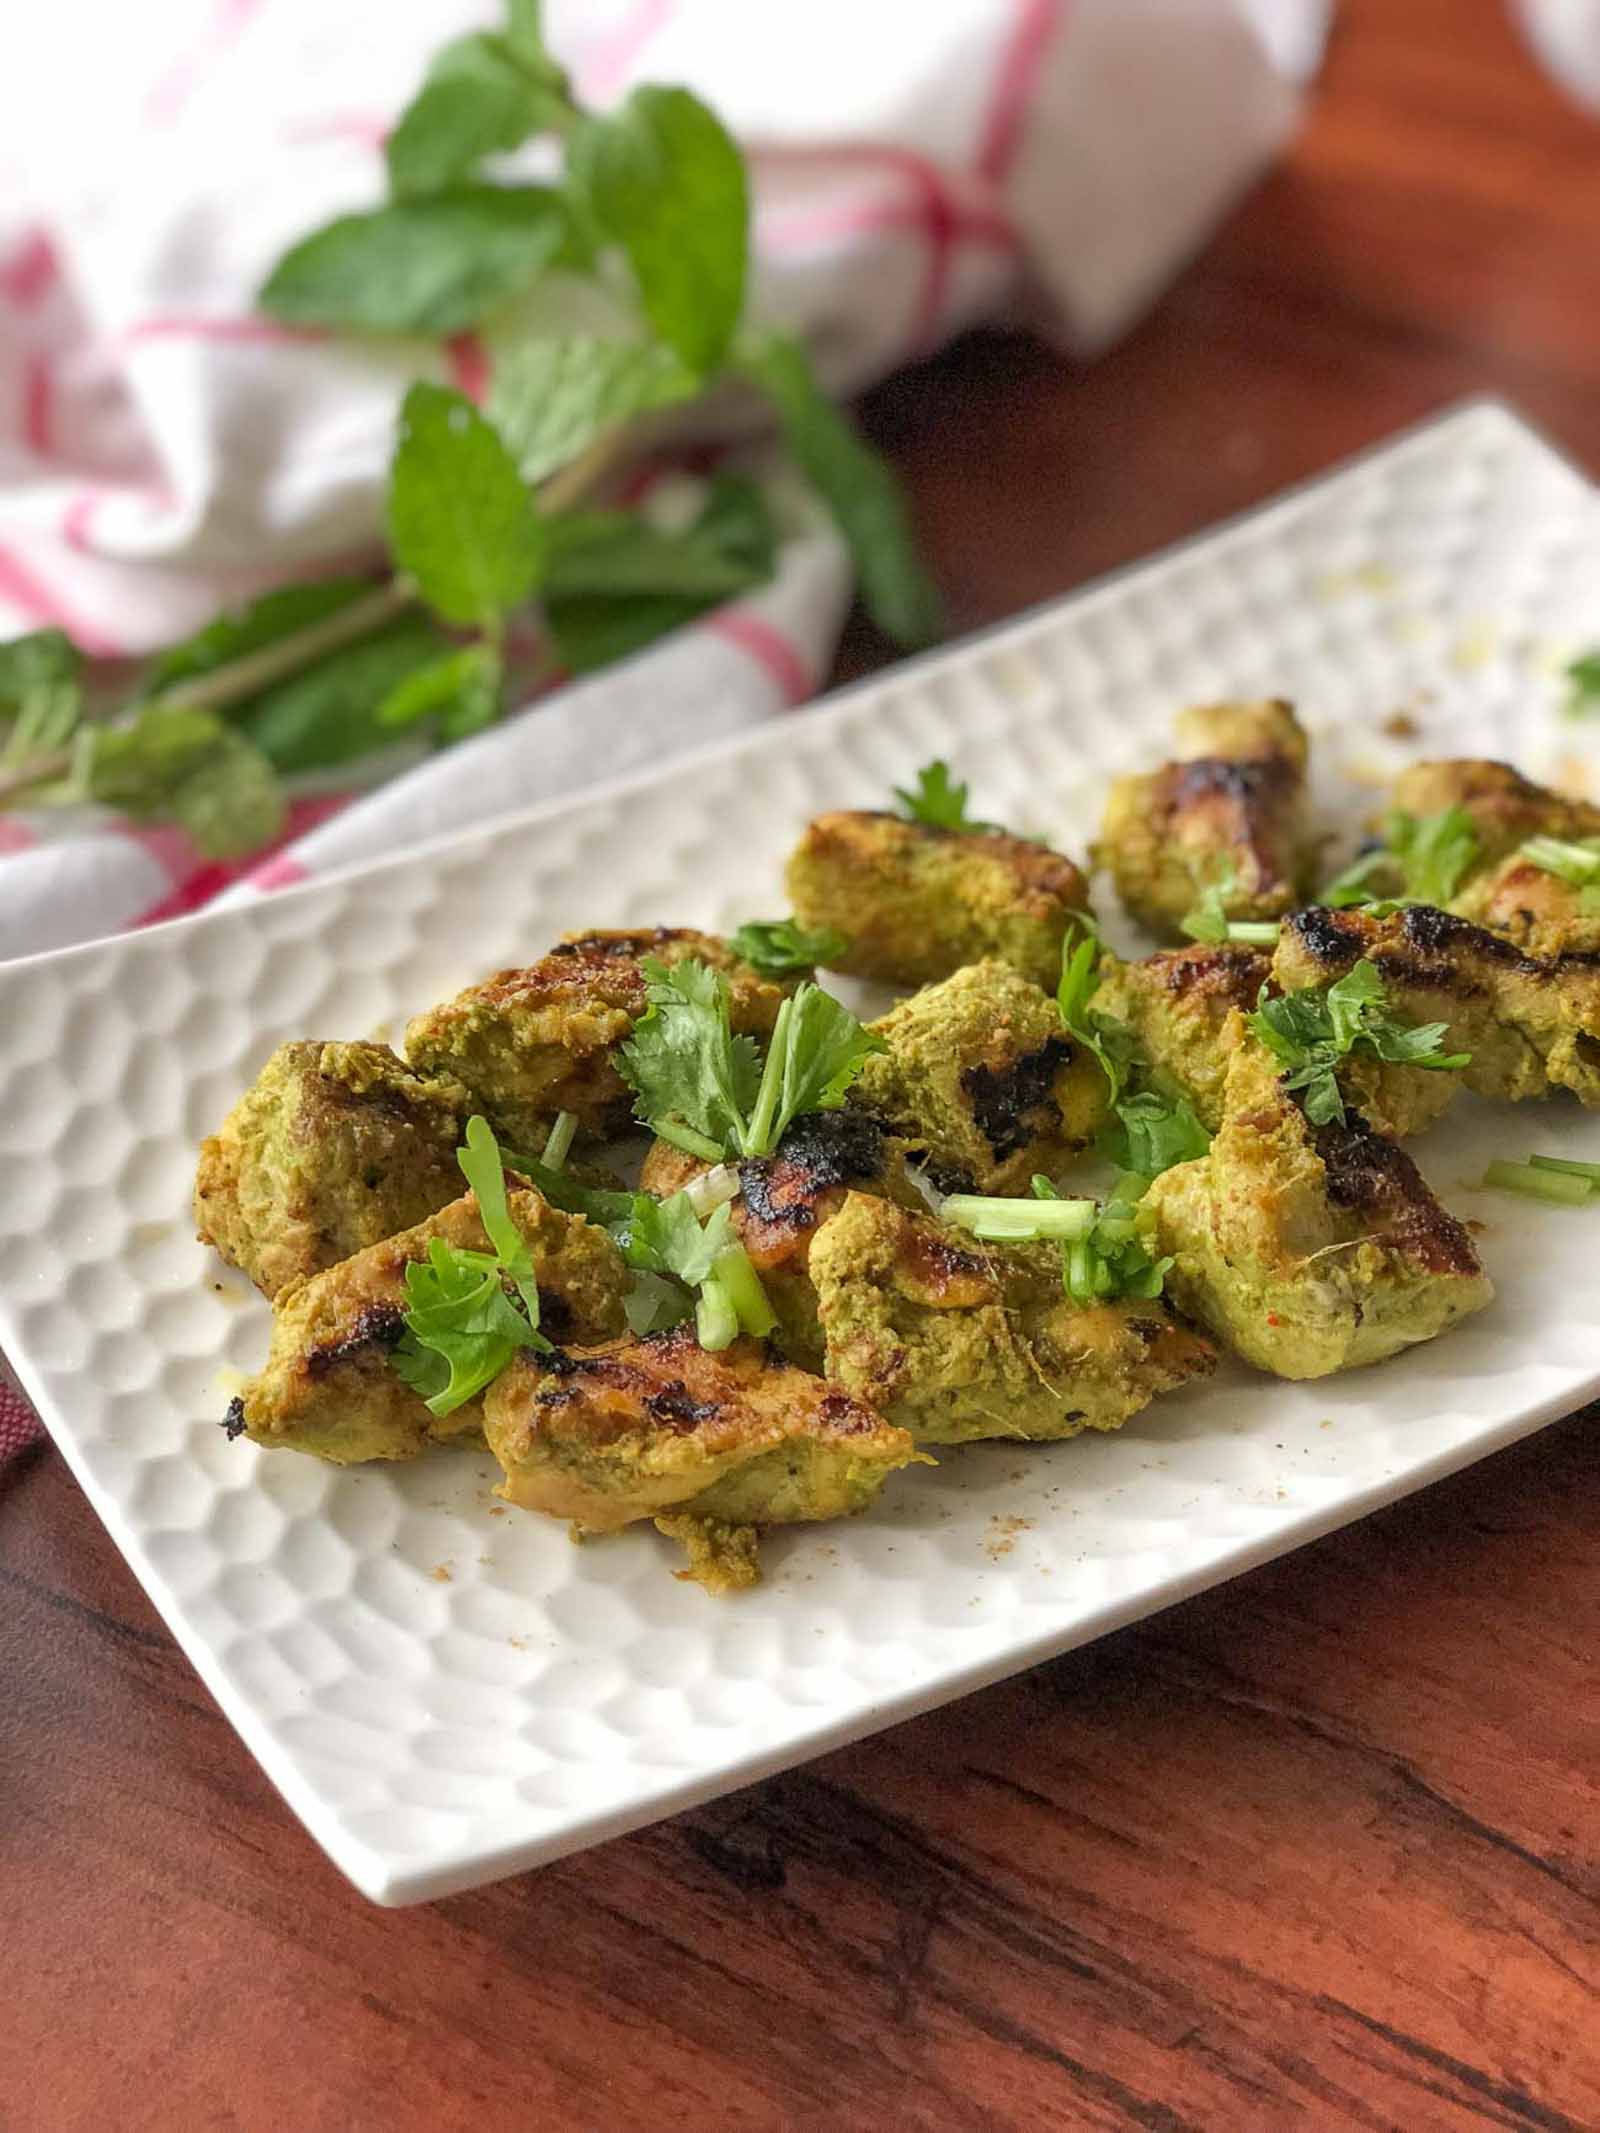 धनिया पुदीना चिकन टिक्का रेसिपी - Dhaniya Pudina Chicken Tikka Recipe